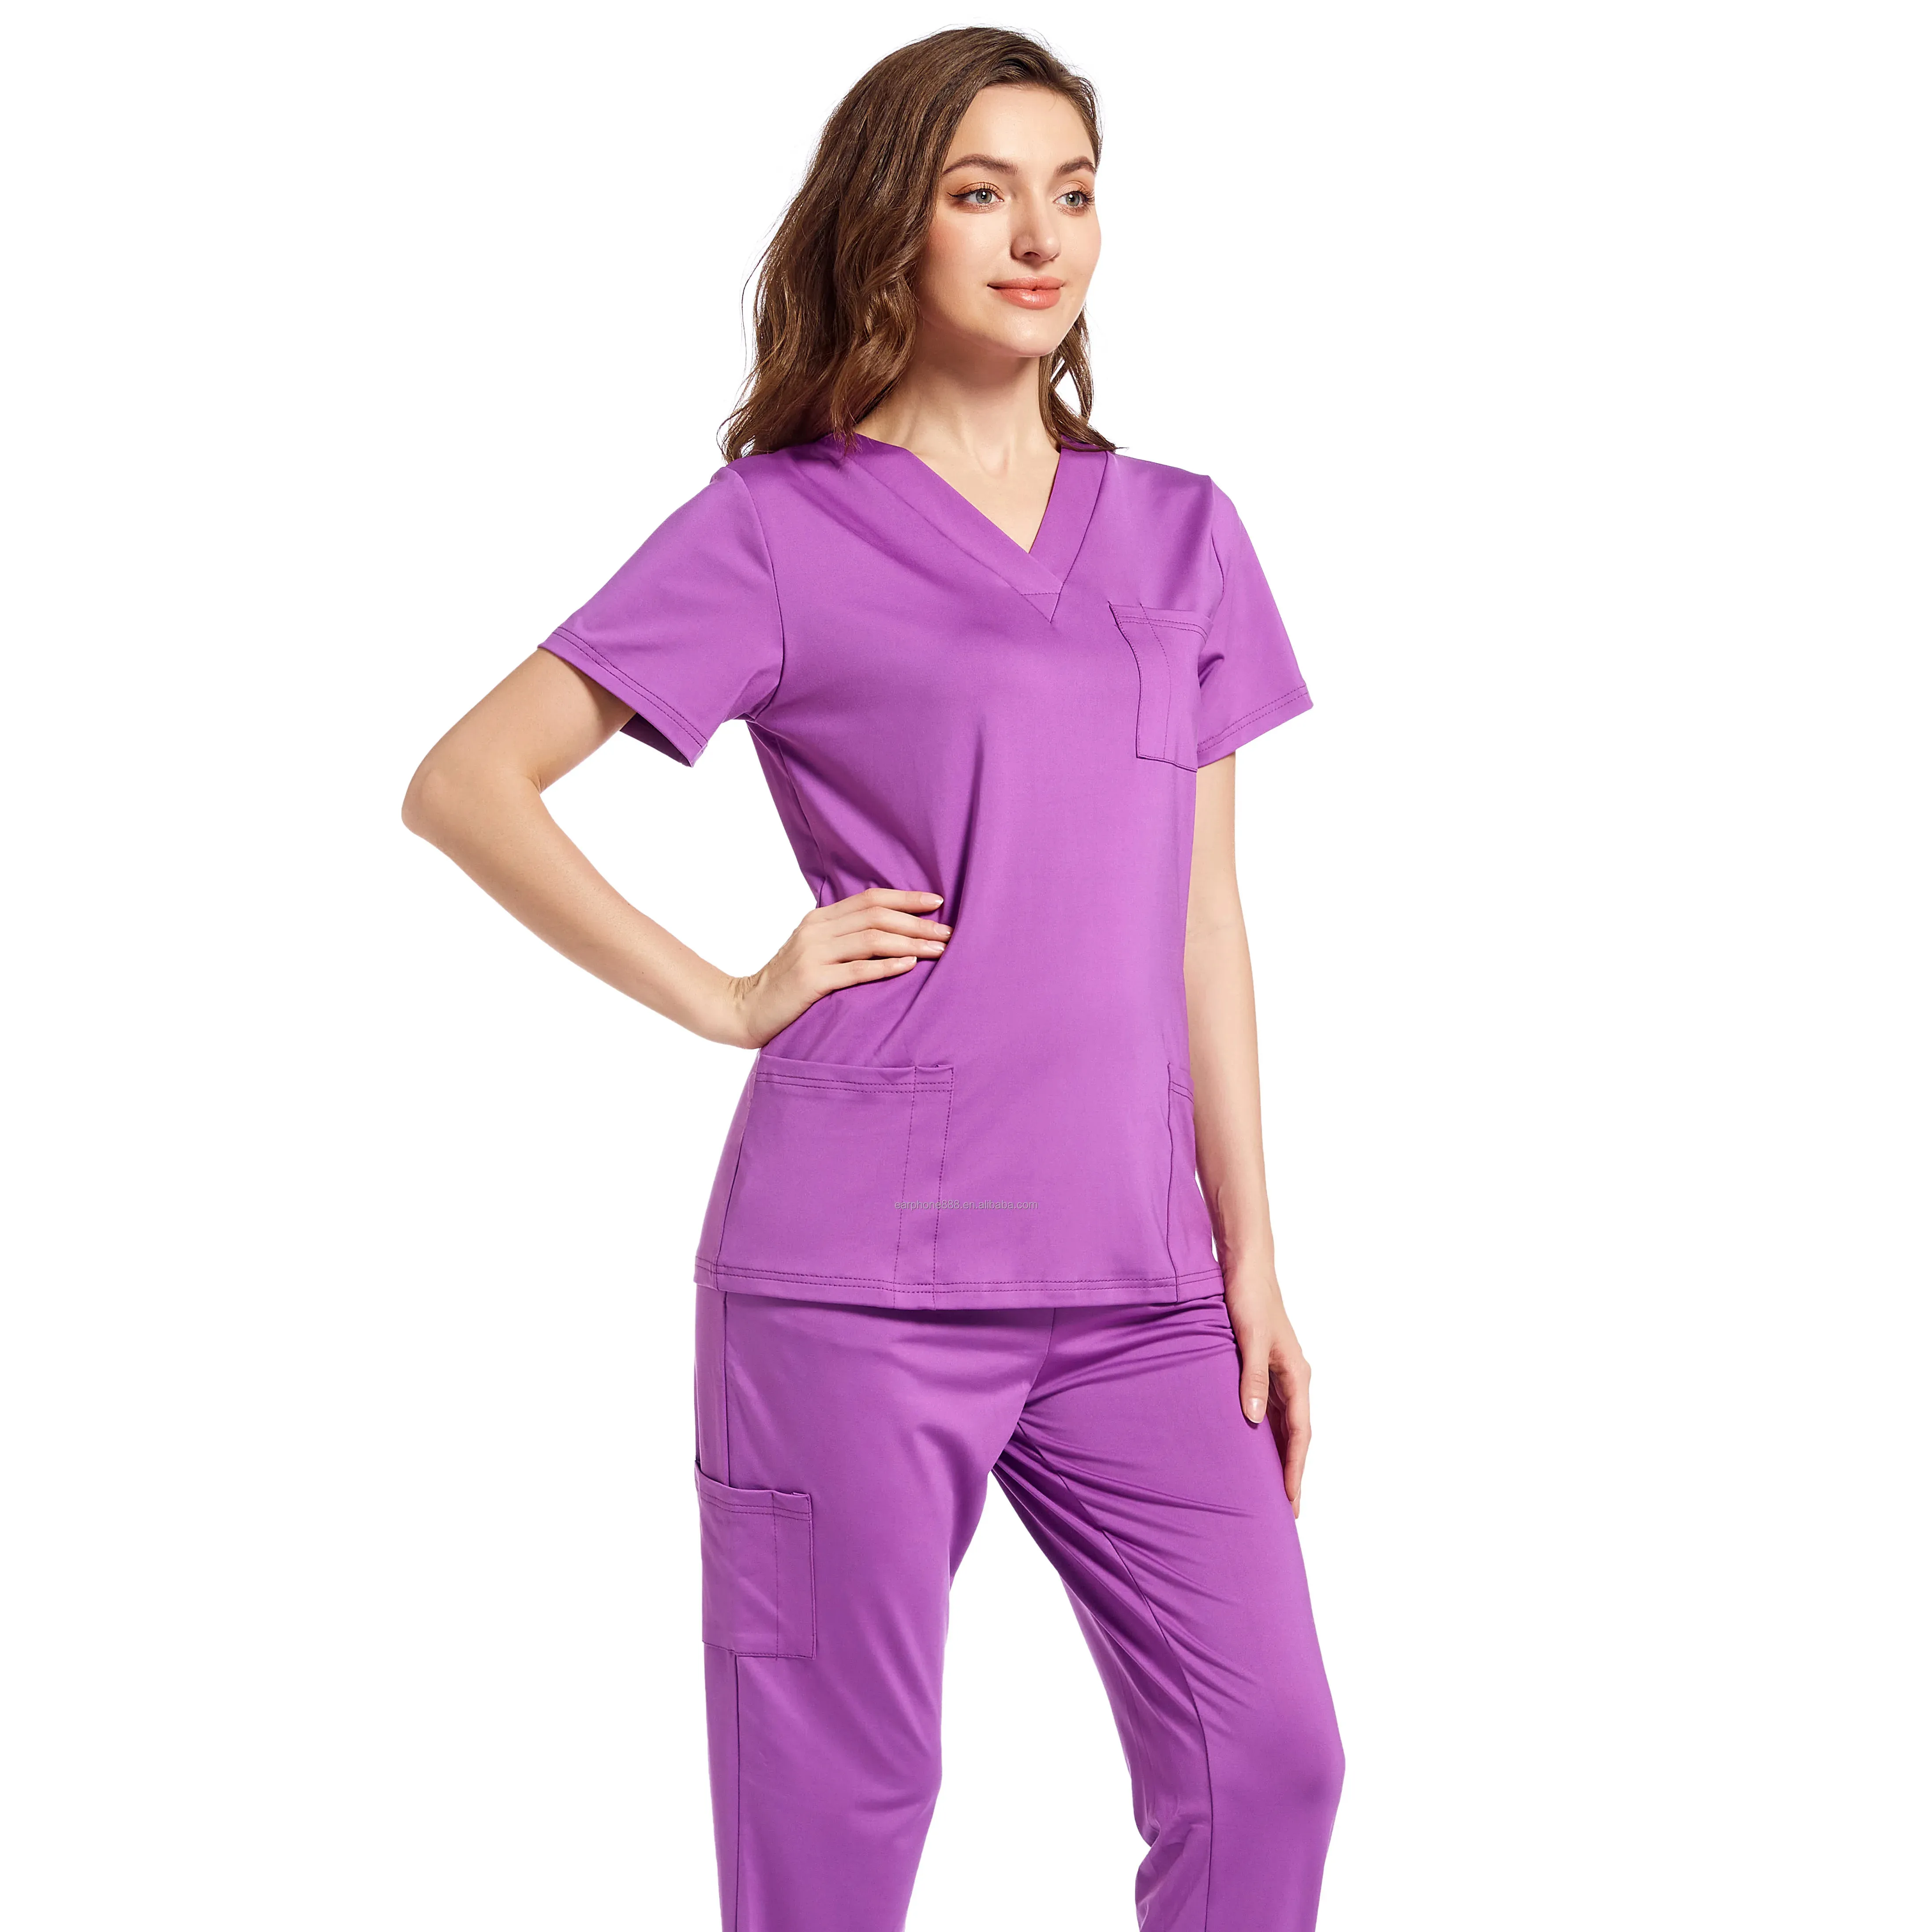 Fashionable Private Label Short Sleeve Tops Jogger Pants Medical Hospital Nursing Scrub Uniforms Men Women Nurse Scrubs Set